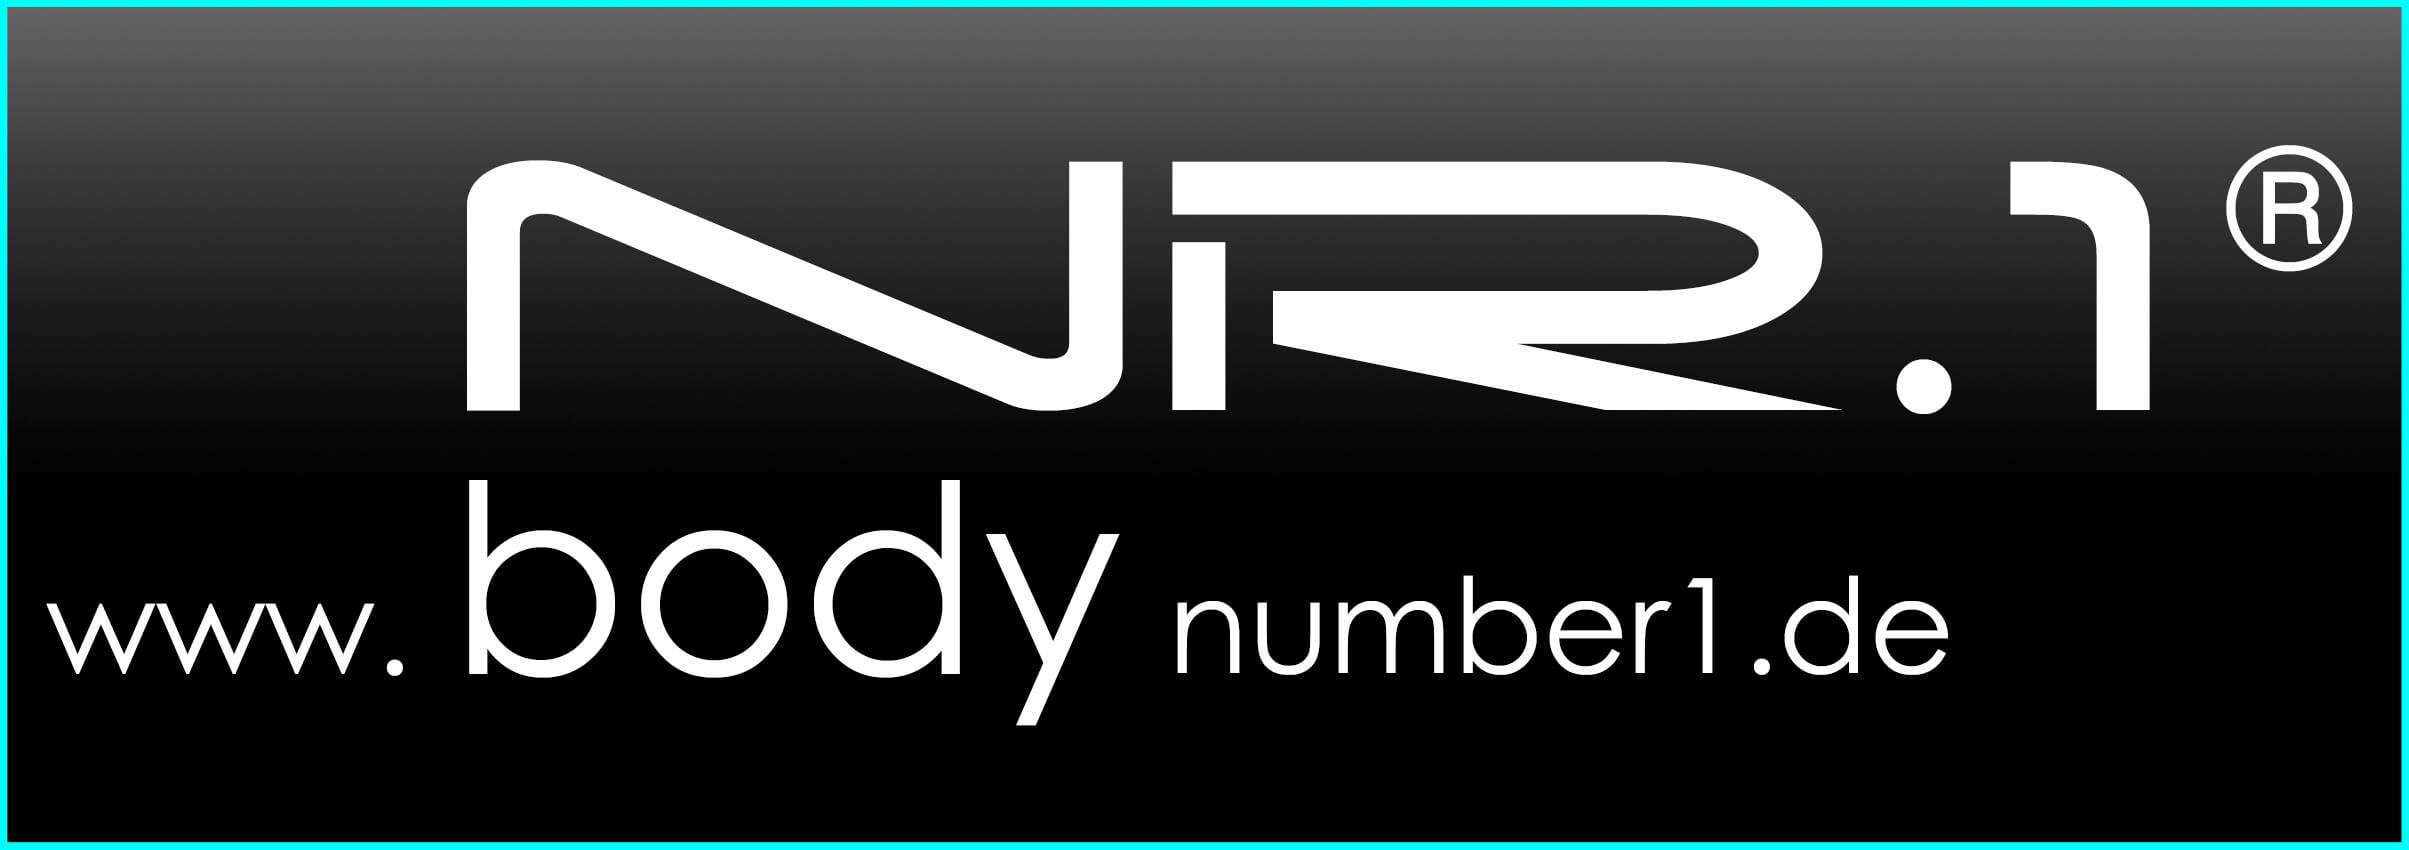 body number 1 logo